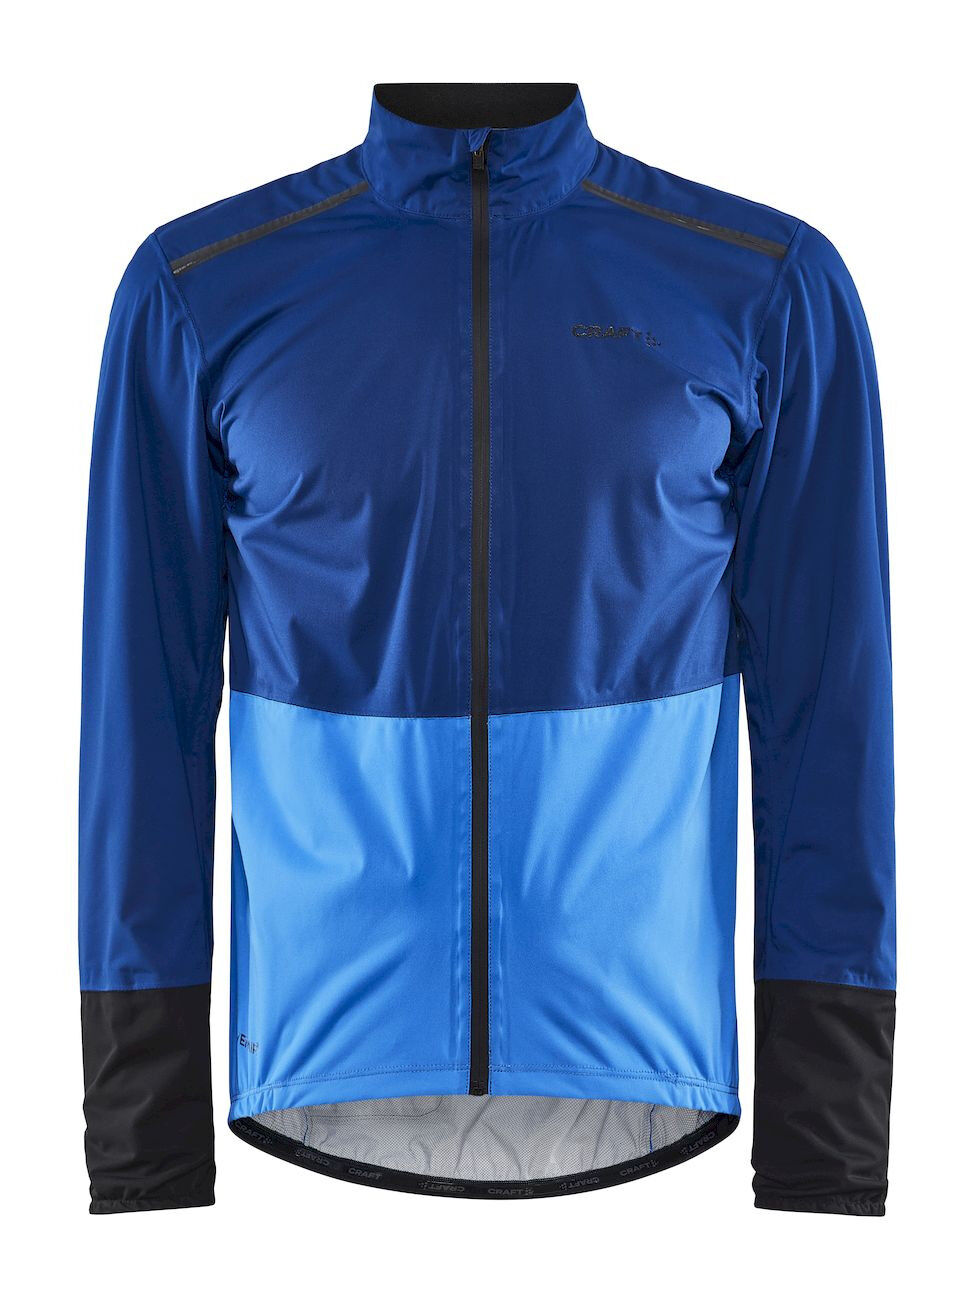 Craft ADV Endur Hydro Jacket - Cycling windproof jacket - Men's